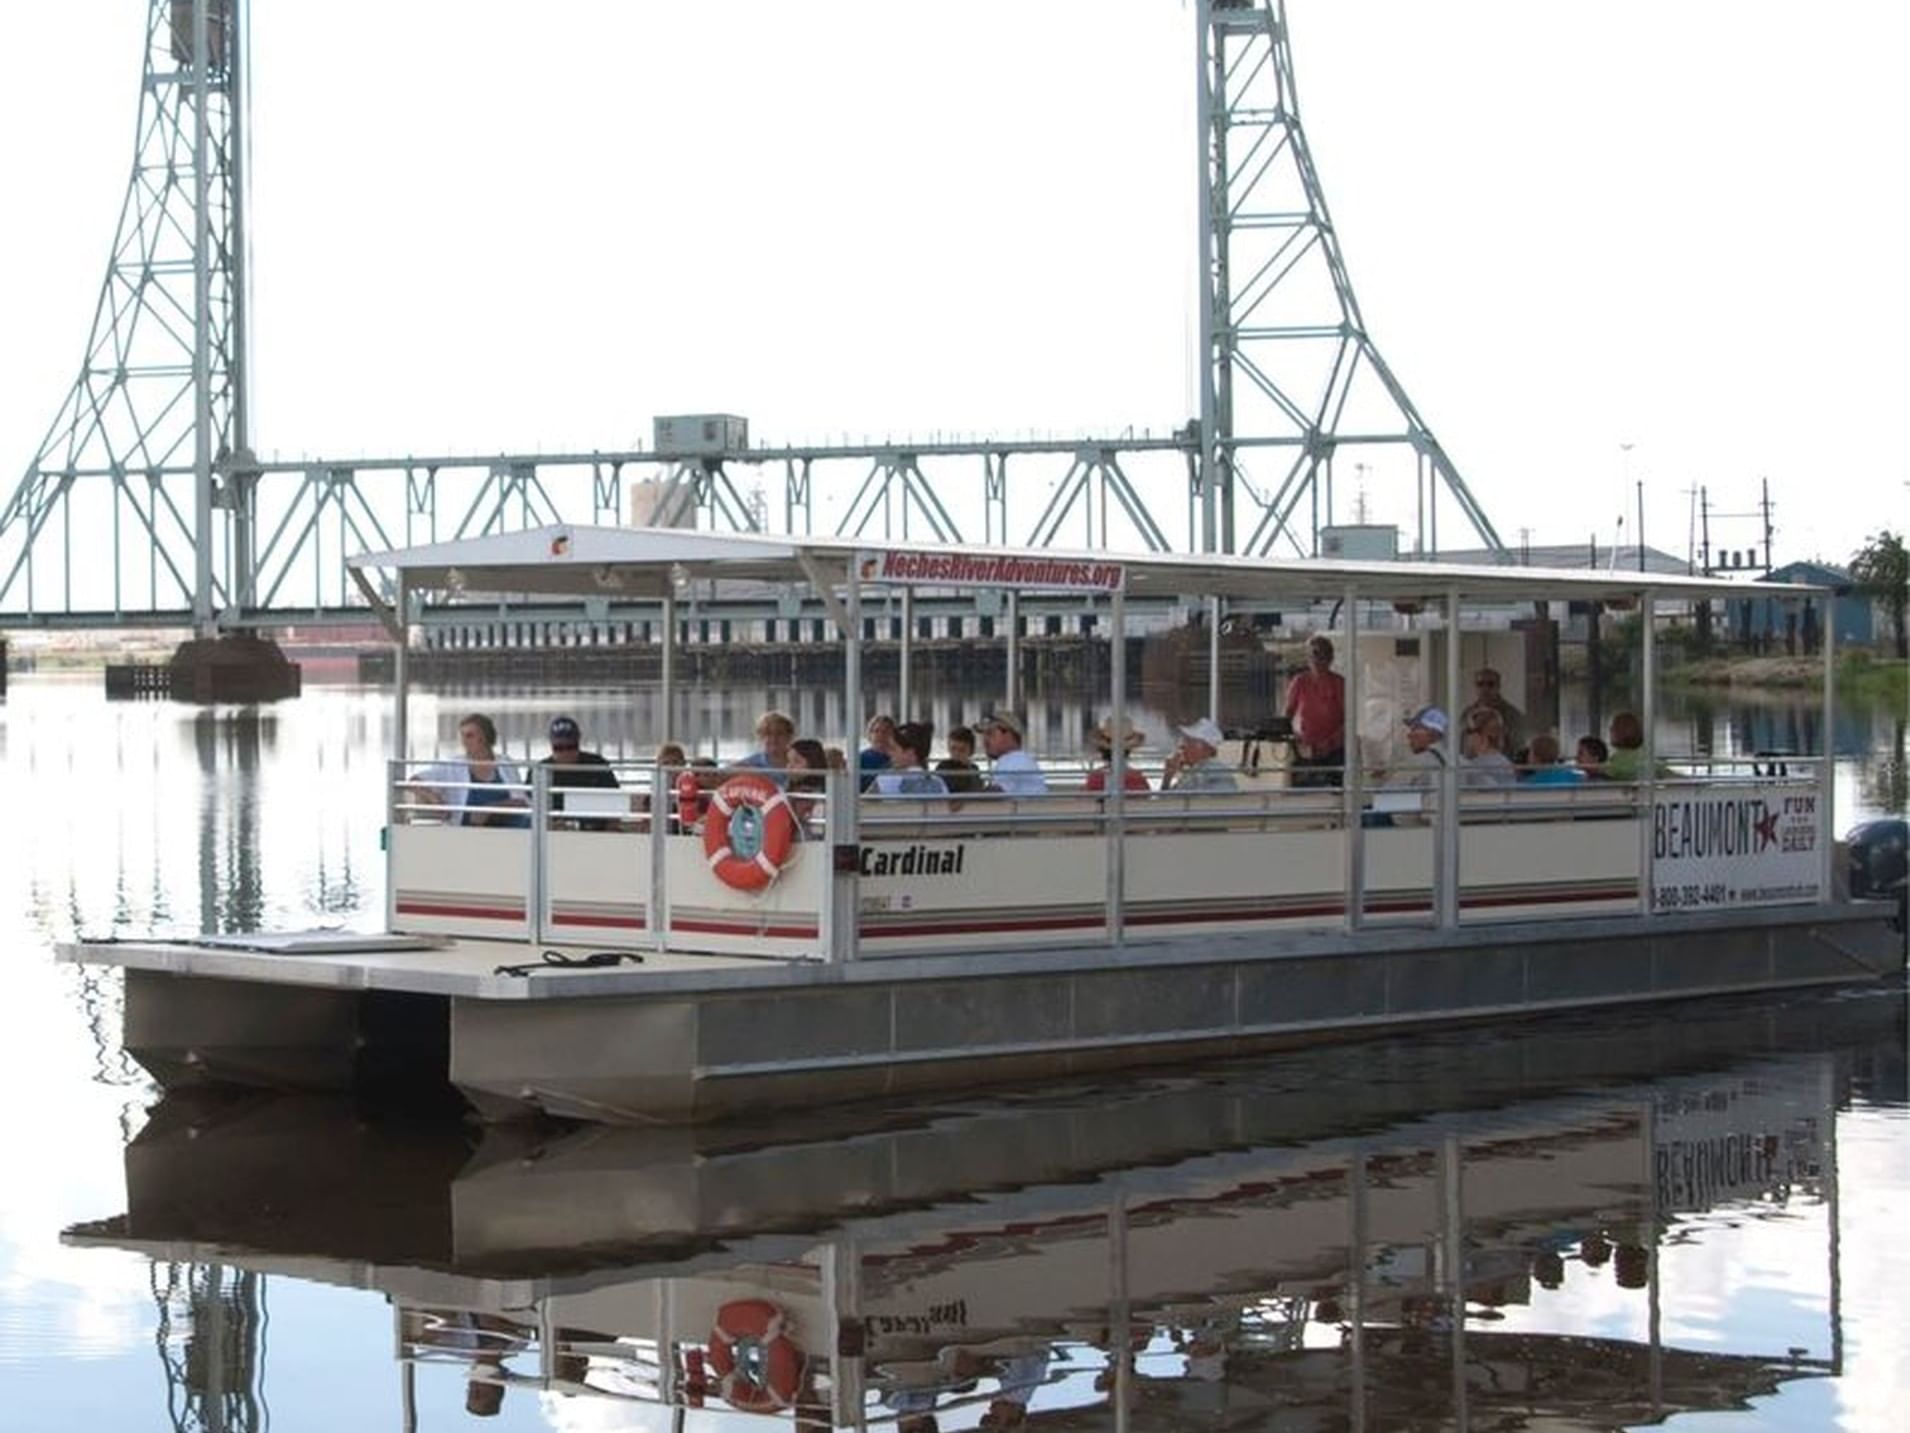 City tour boat at Neches river near MCM Elegante Beaumont